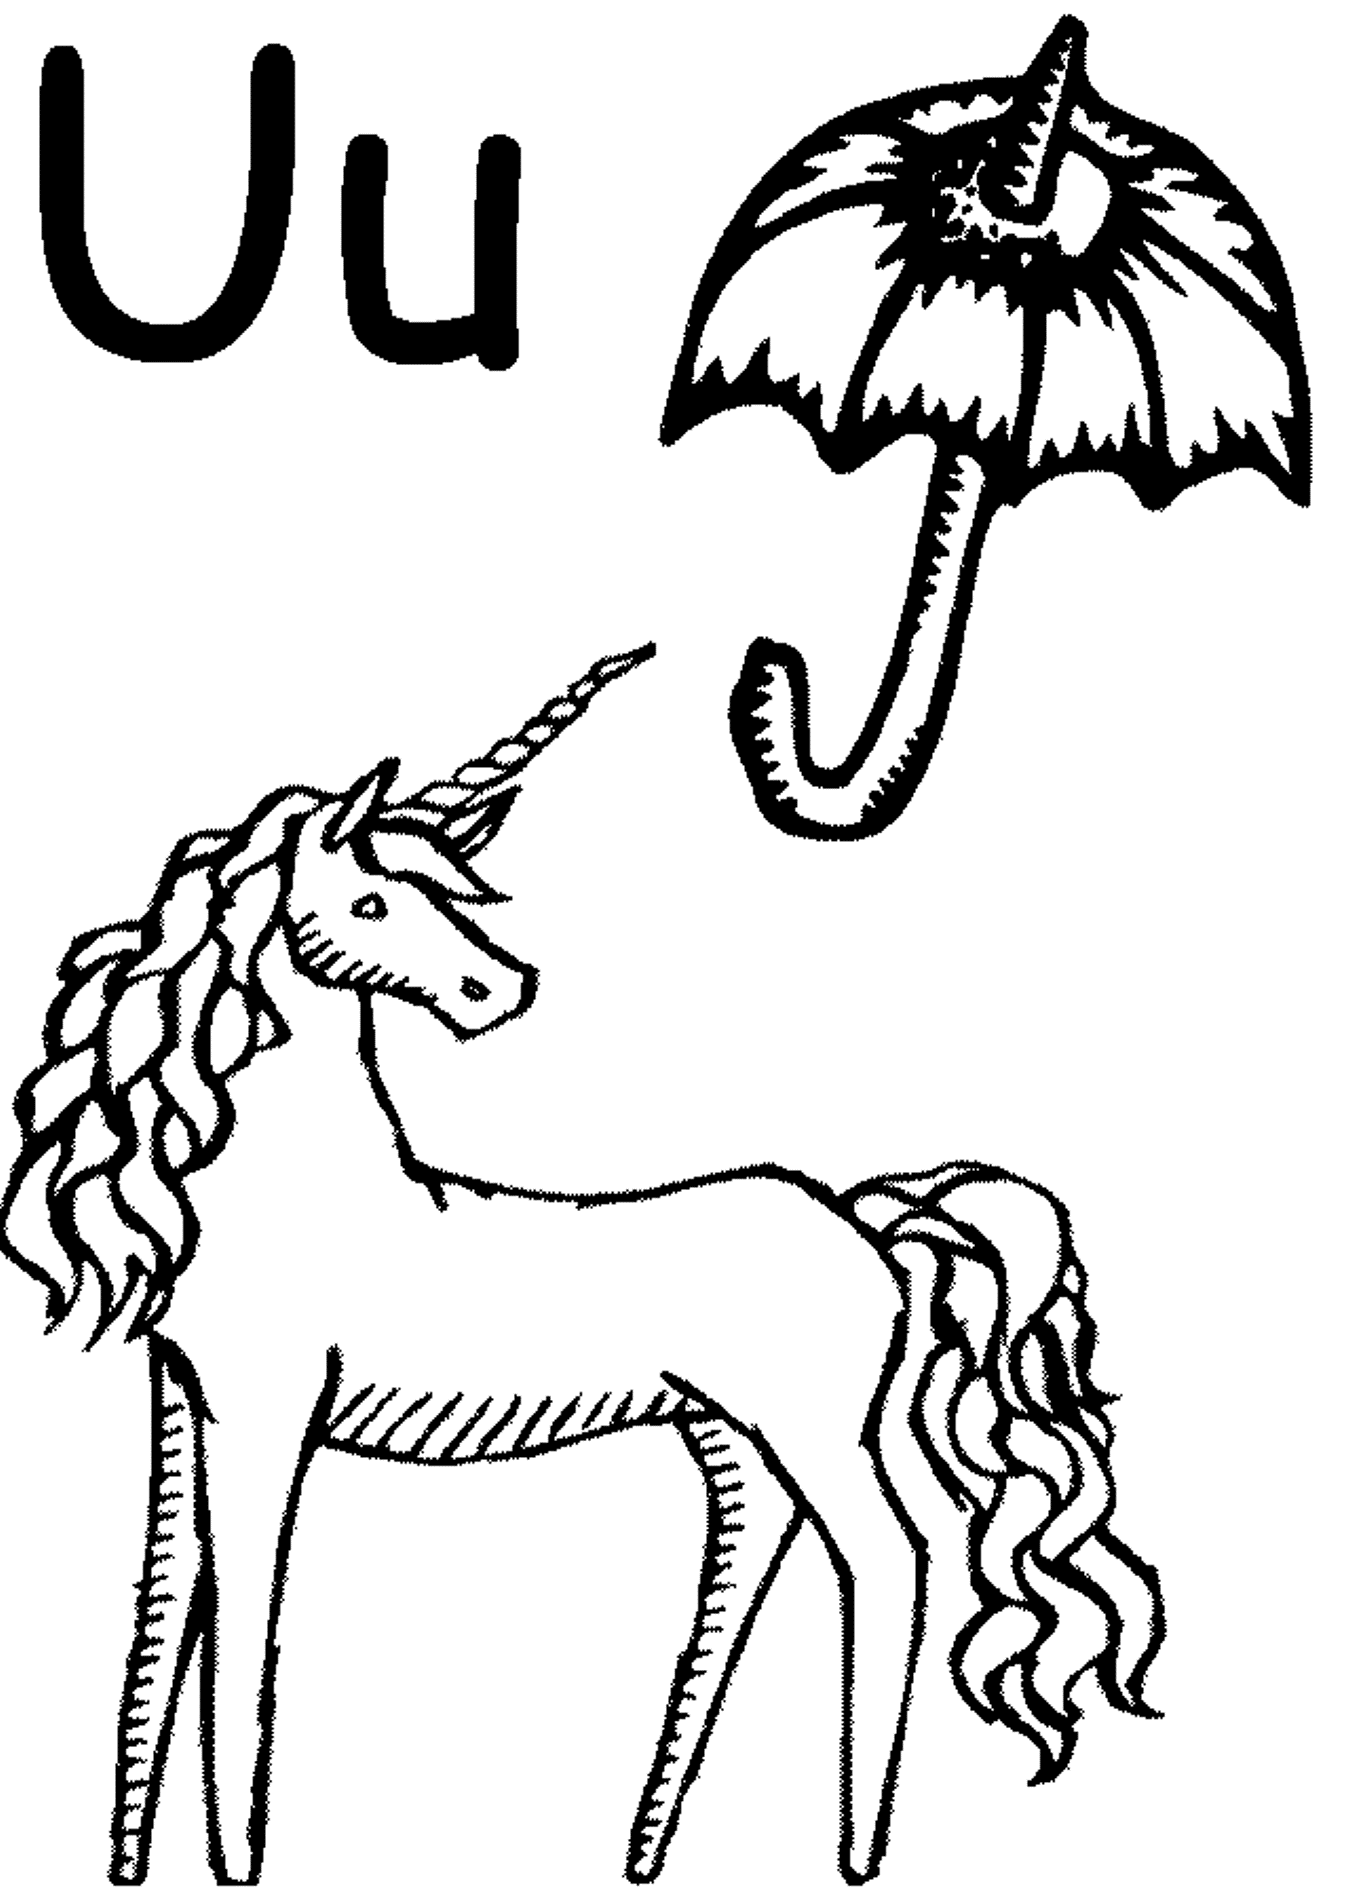 Unicorn And Umbrella Alphabet S Free4979 Coloring Page